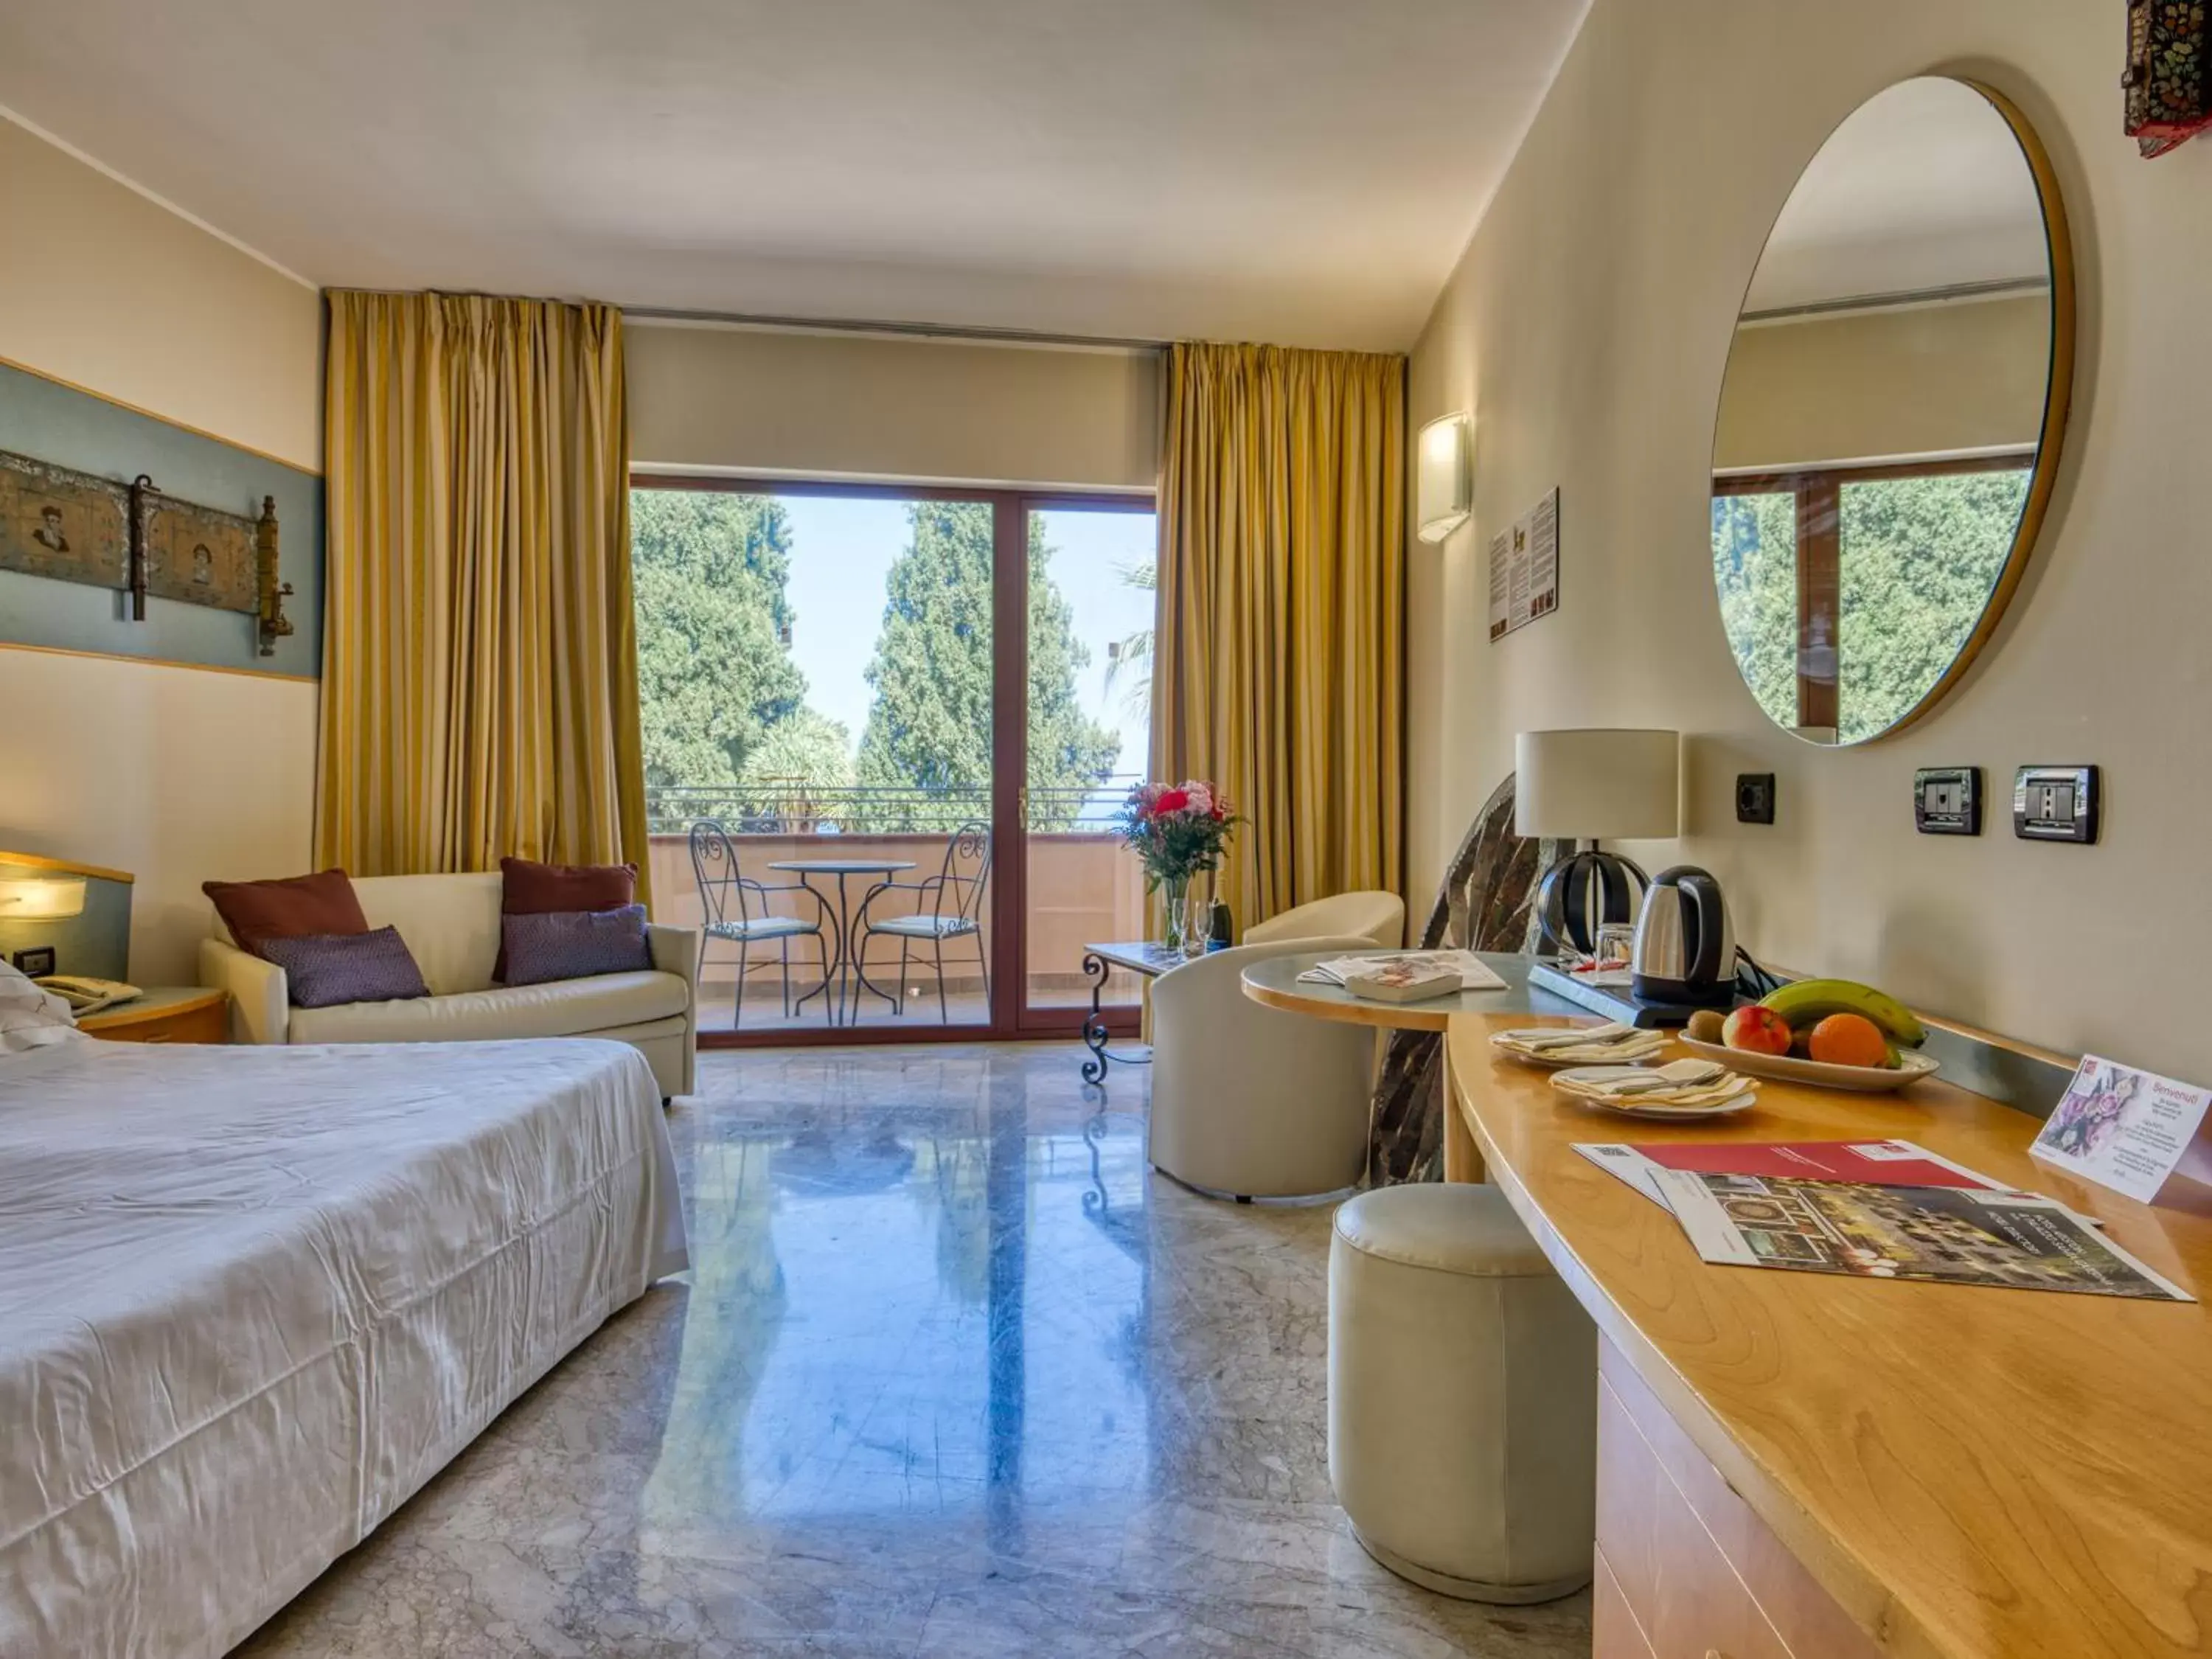 Bedroom in Hotel Ariston and Palazzo Santa Caterina